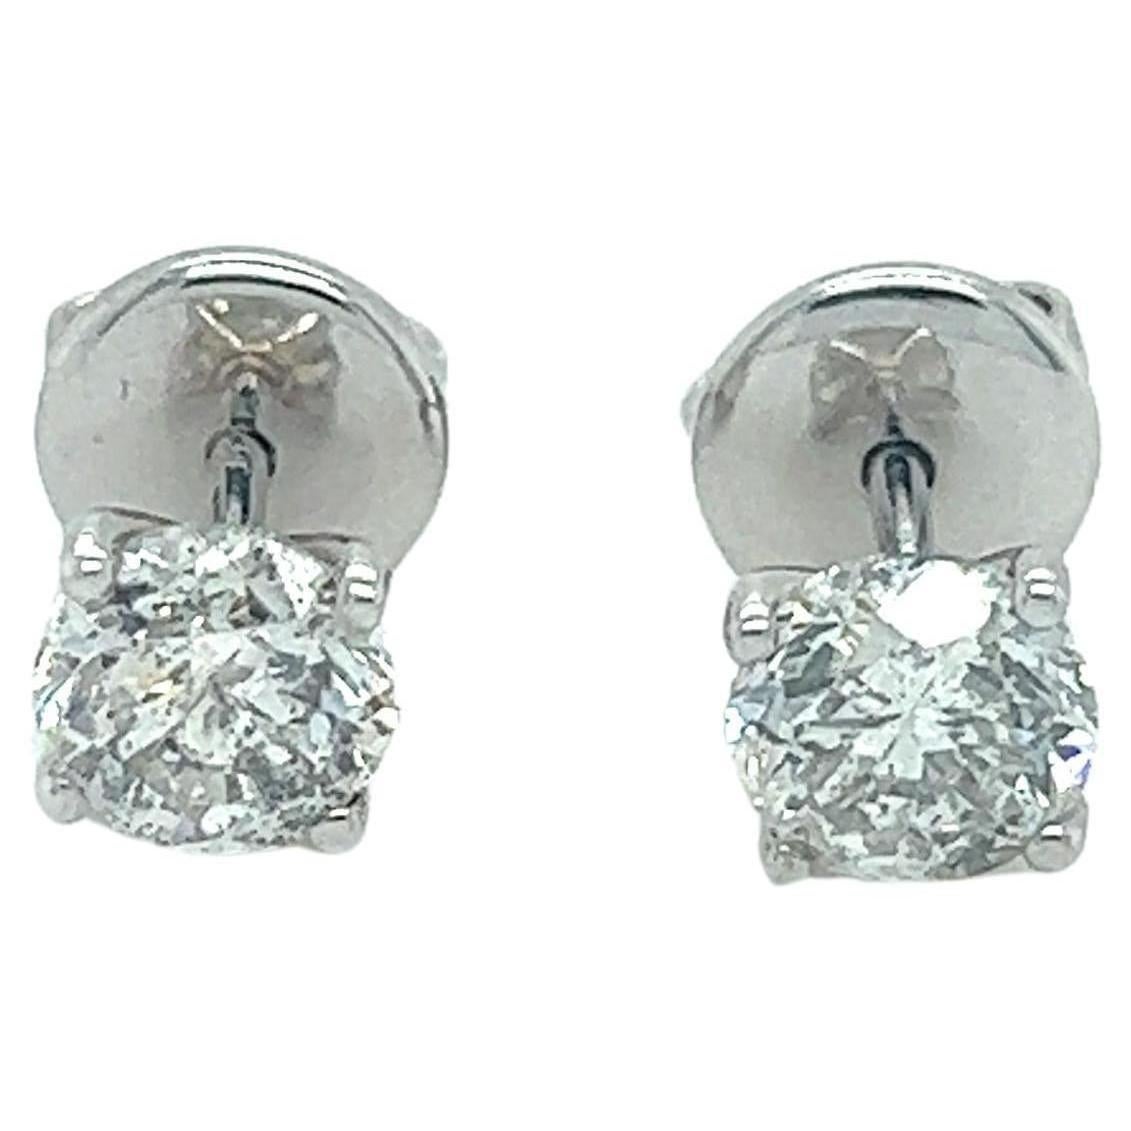 Diamond Stud Earrings 0.48 ct. in 18k gold settings - Color F